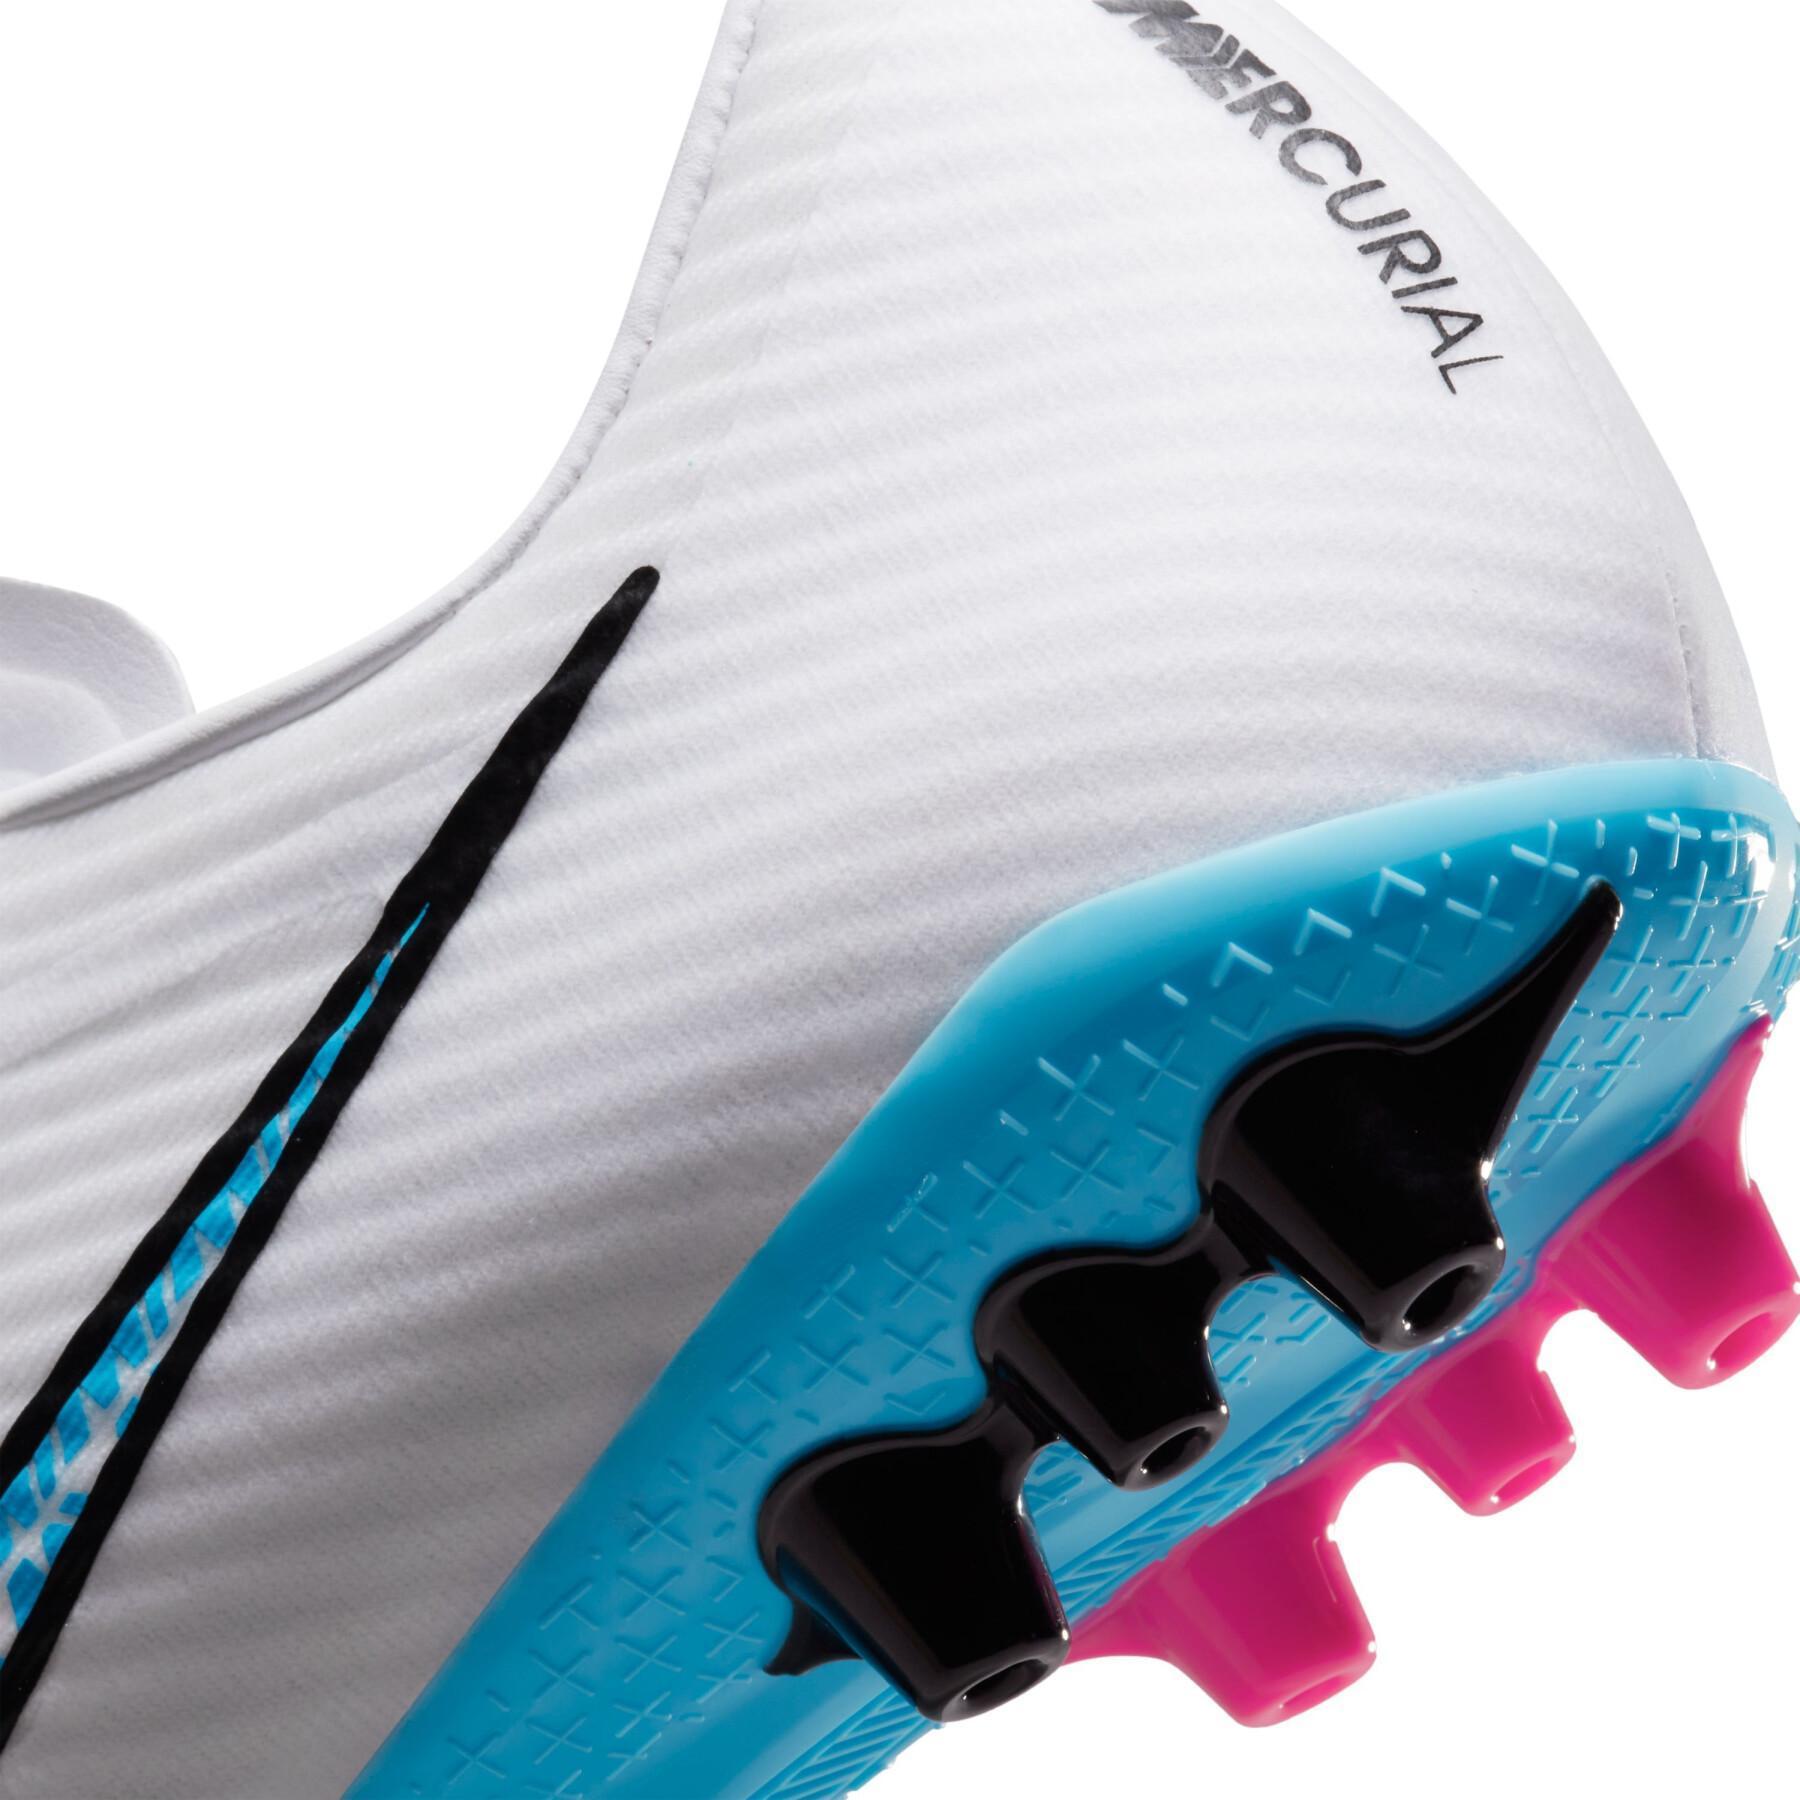 Botas de fútbol Nike Zoom Mercurial Vapor 15 Academy AG - Blast Pack